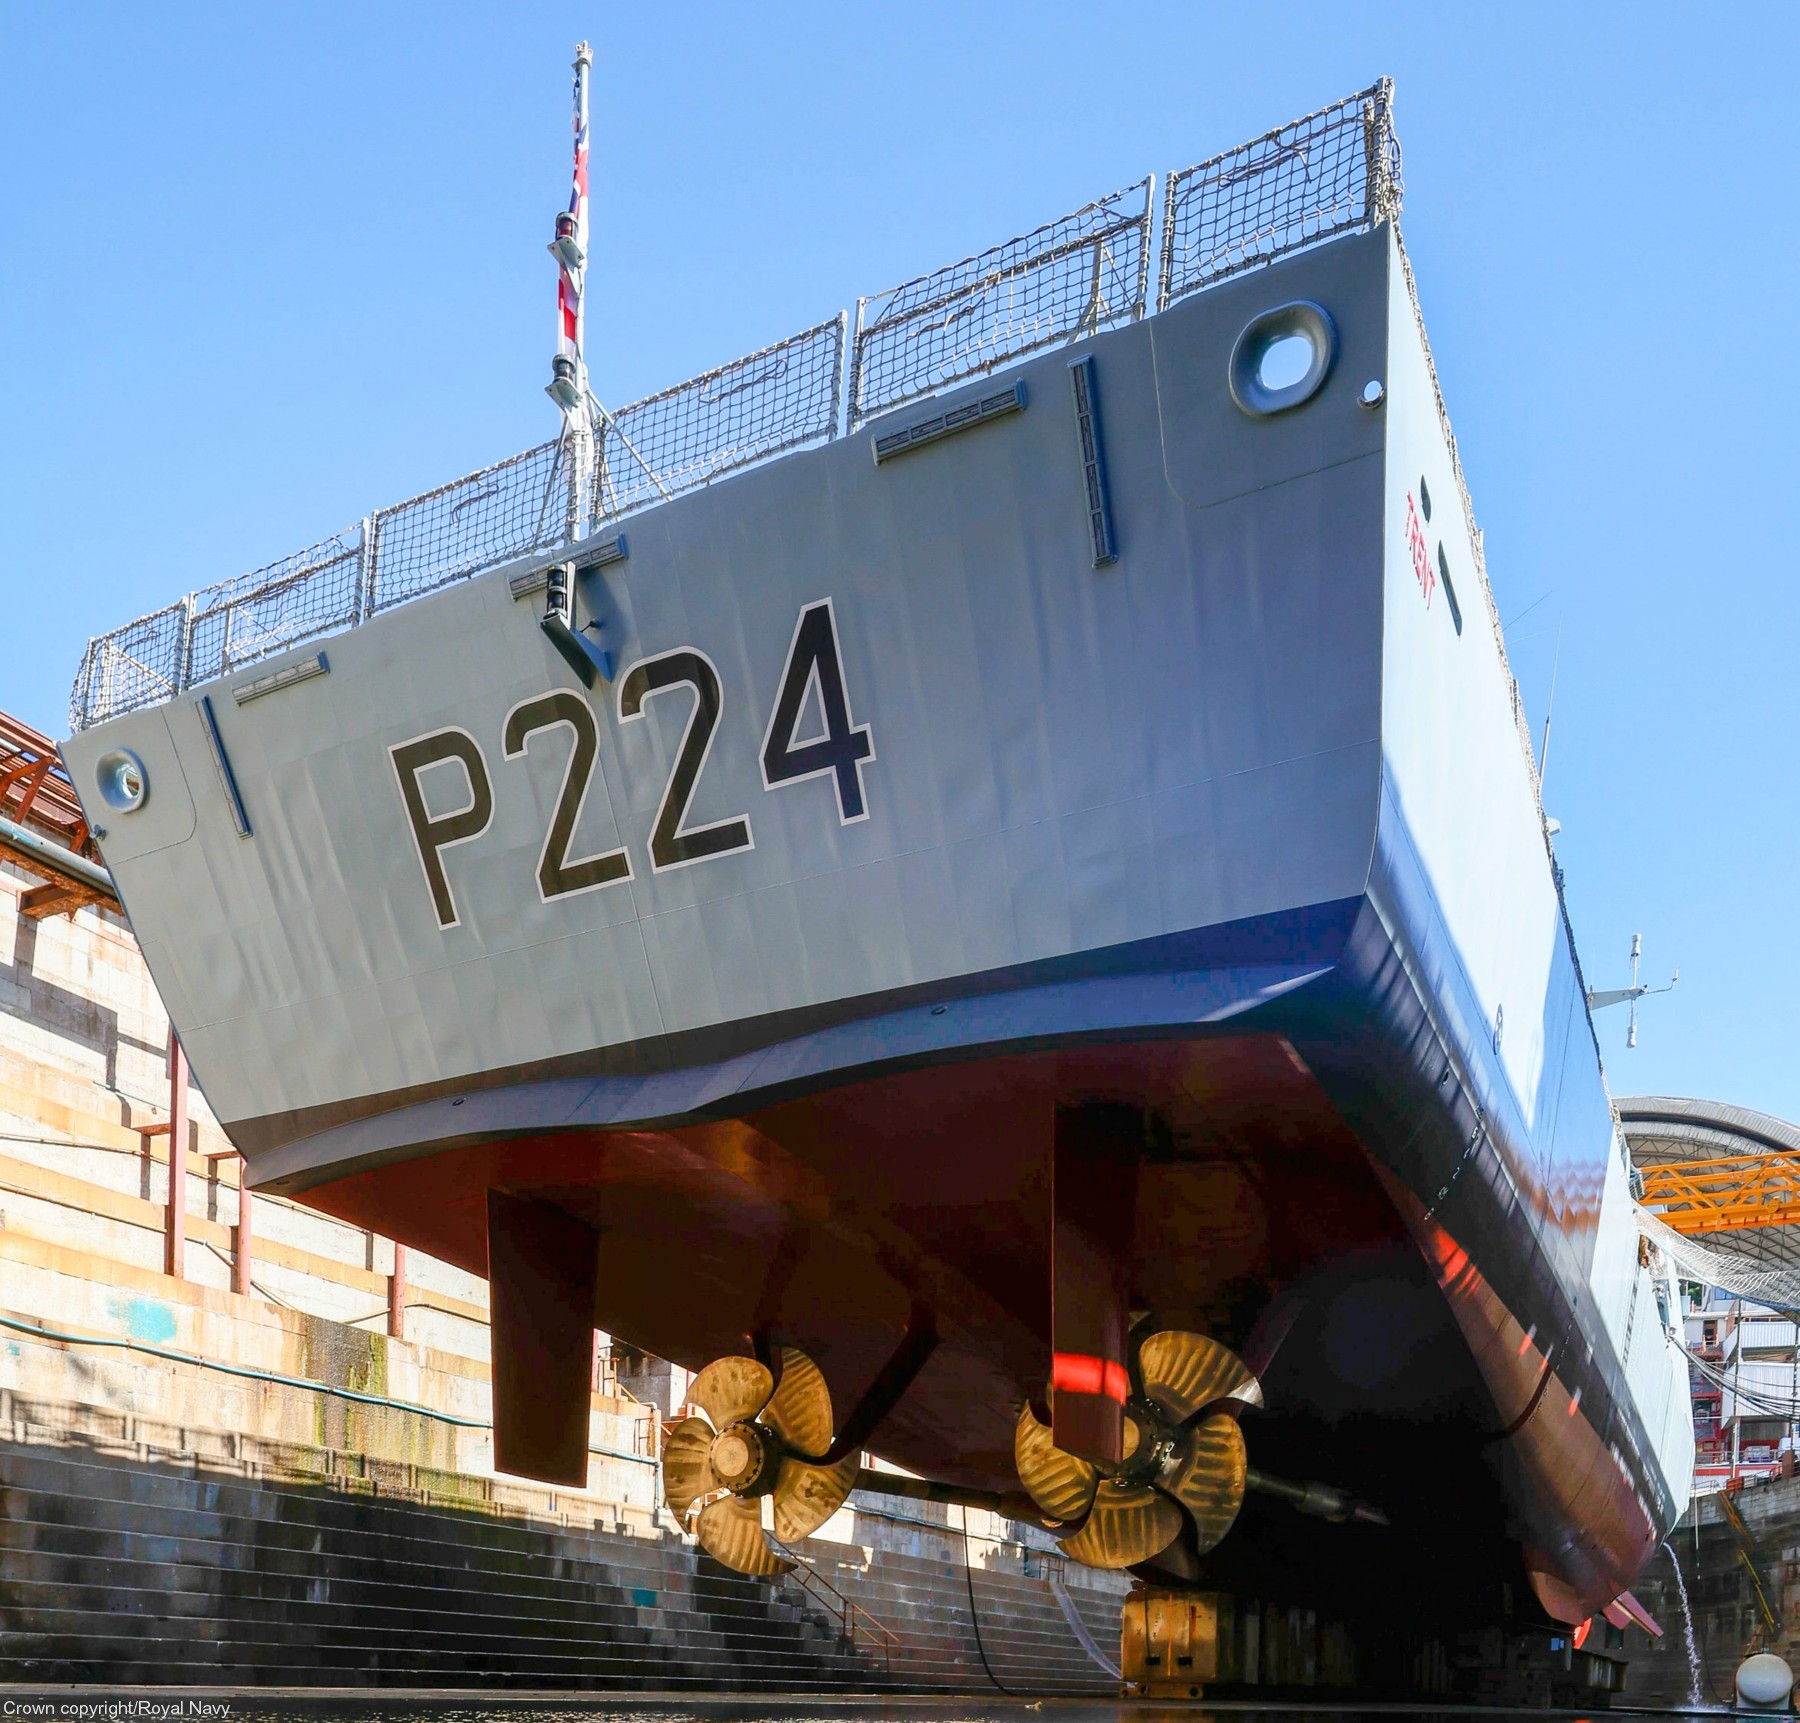 p224 hms trent river class offshore patrol vessel opv royal navy 31 dry dock